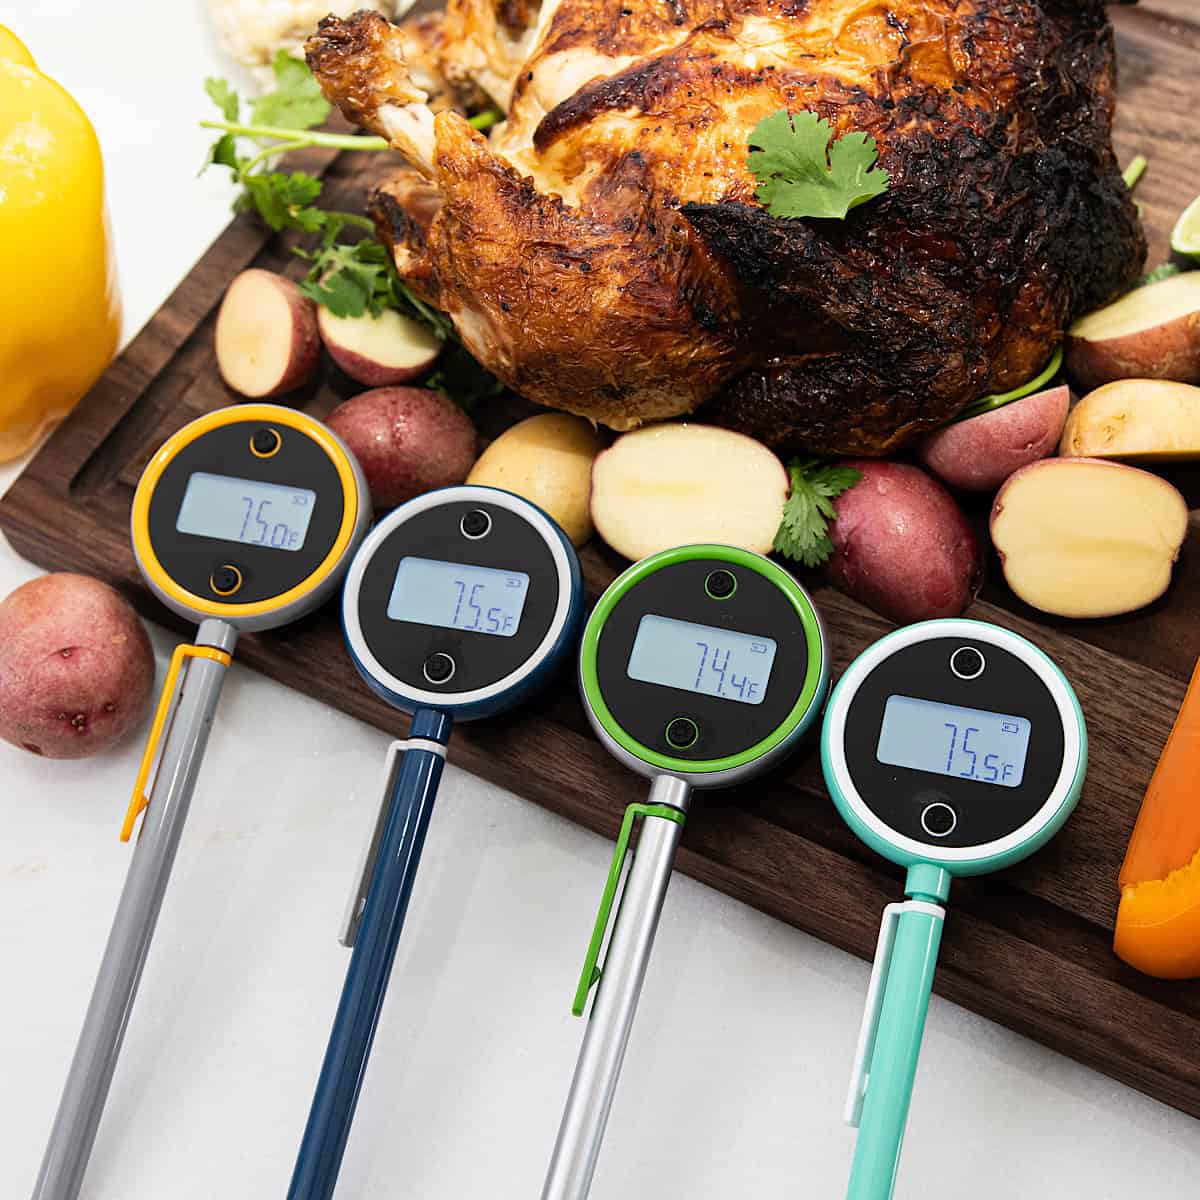 Best Steak Thermometer 2022: The ChefsTemp Pocket Pro